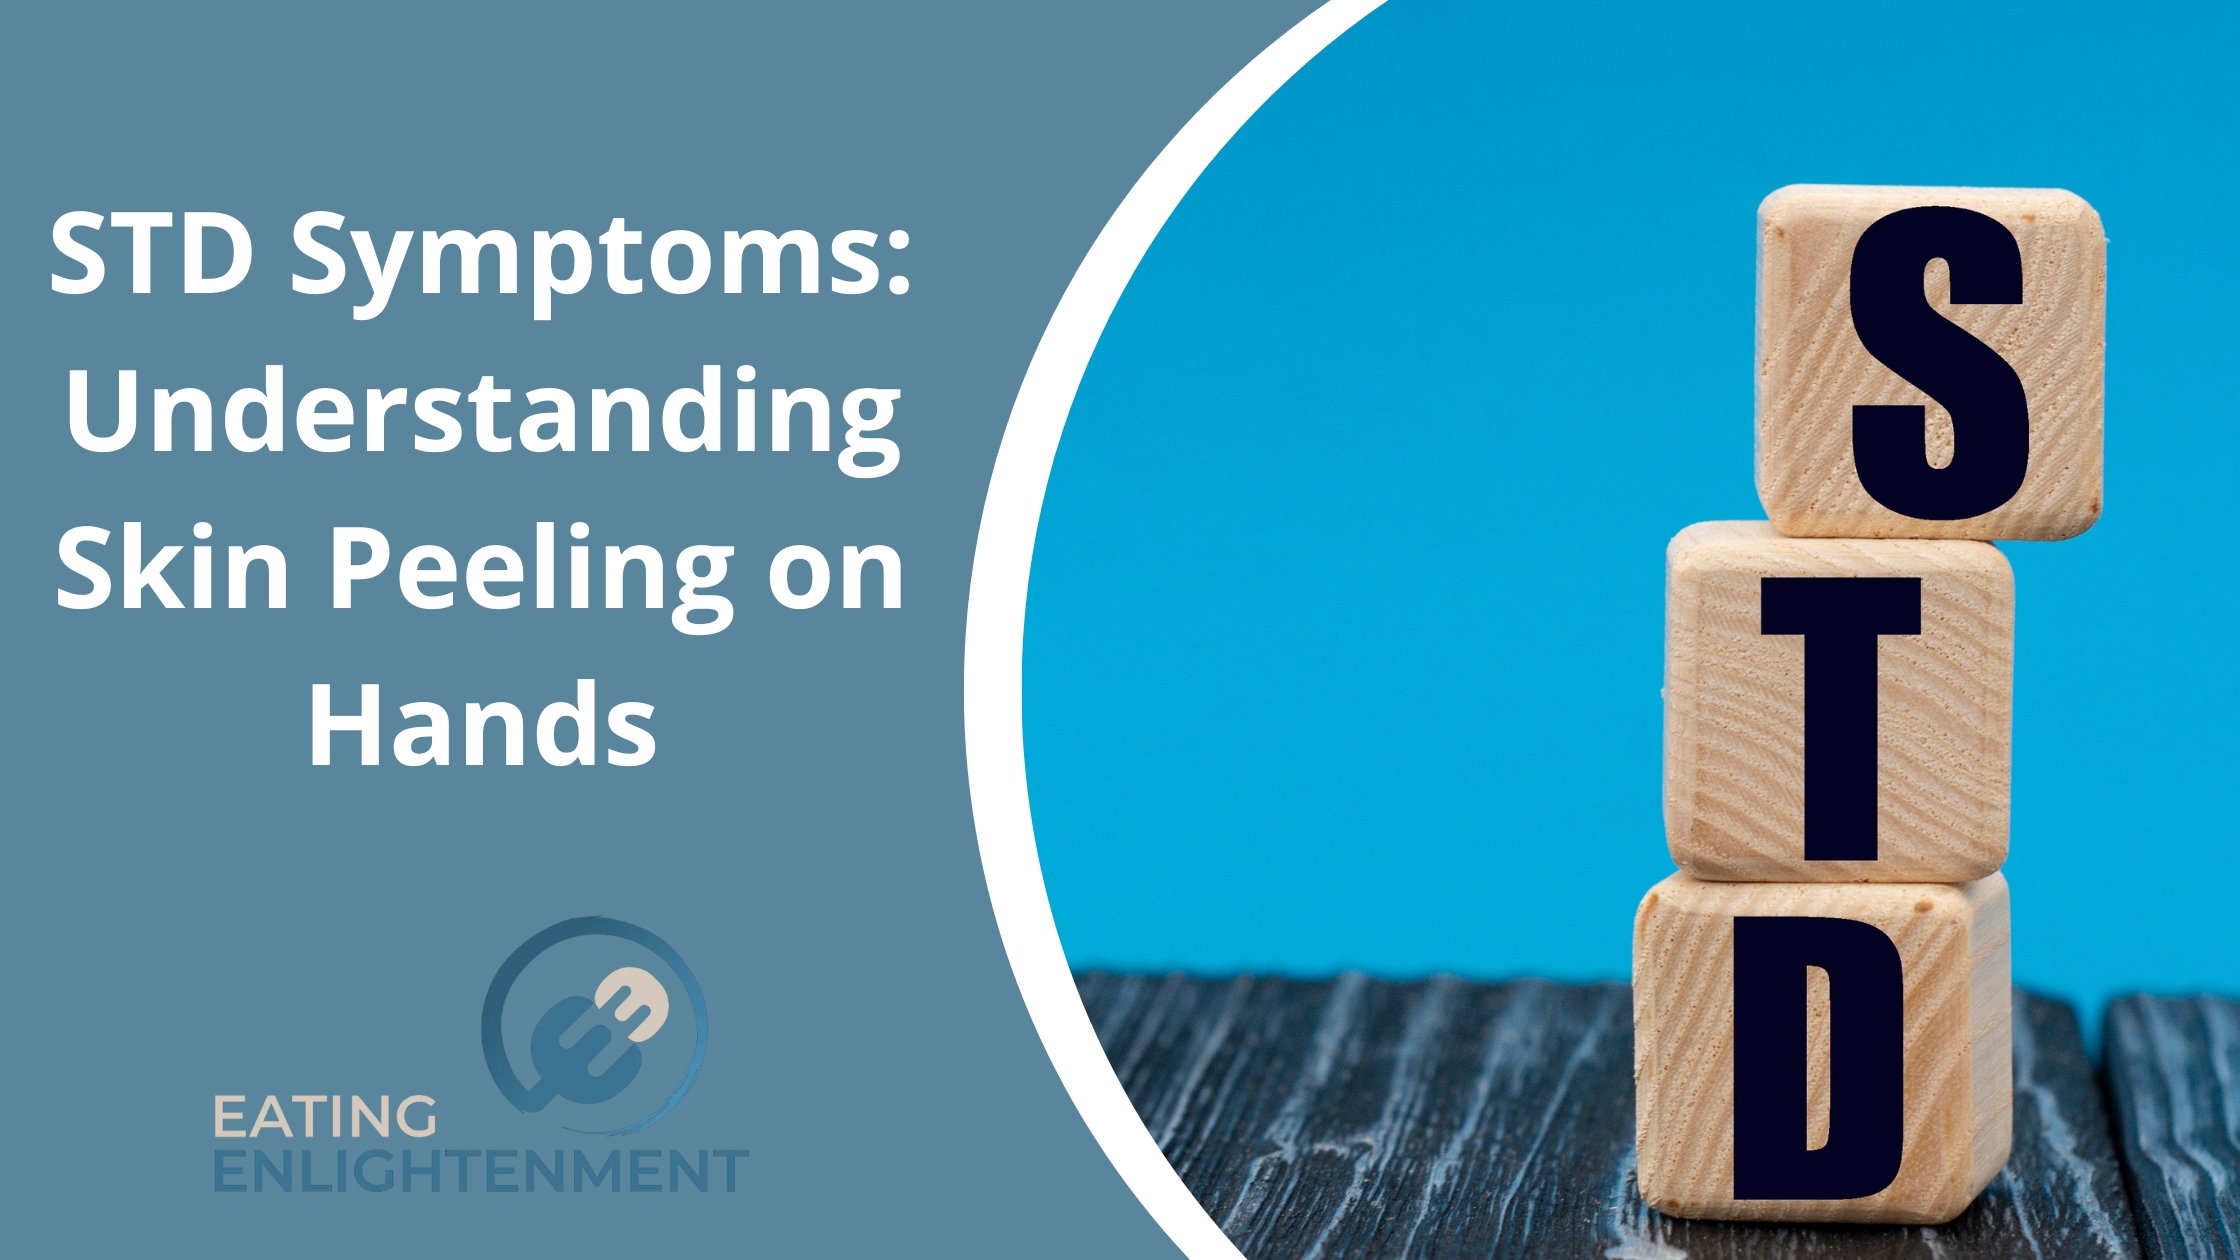 STD Symptoms: Understanding Skin Peeling on Hands